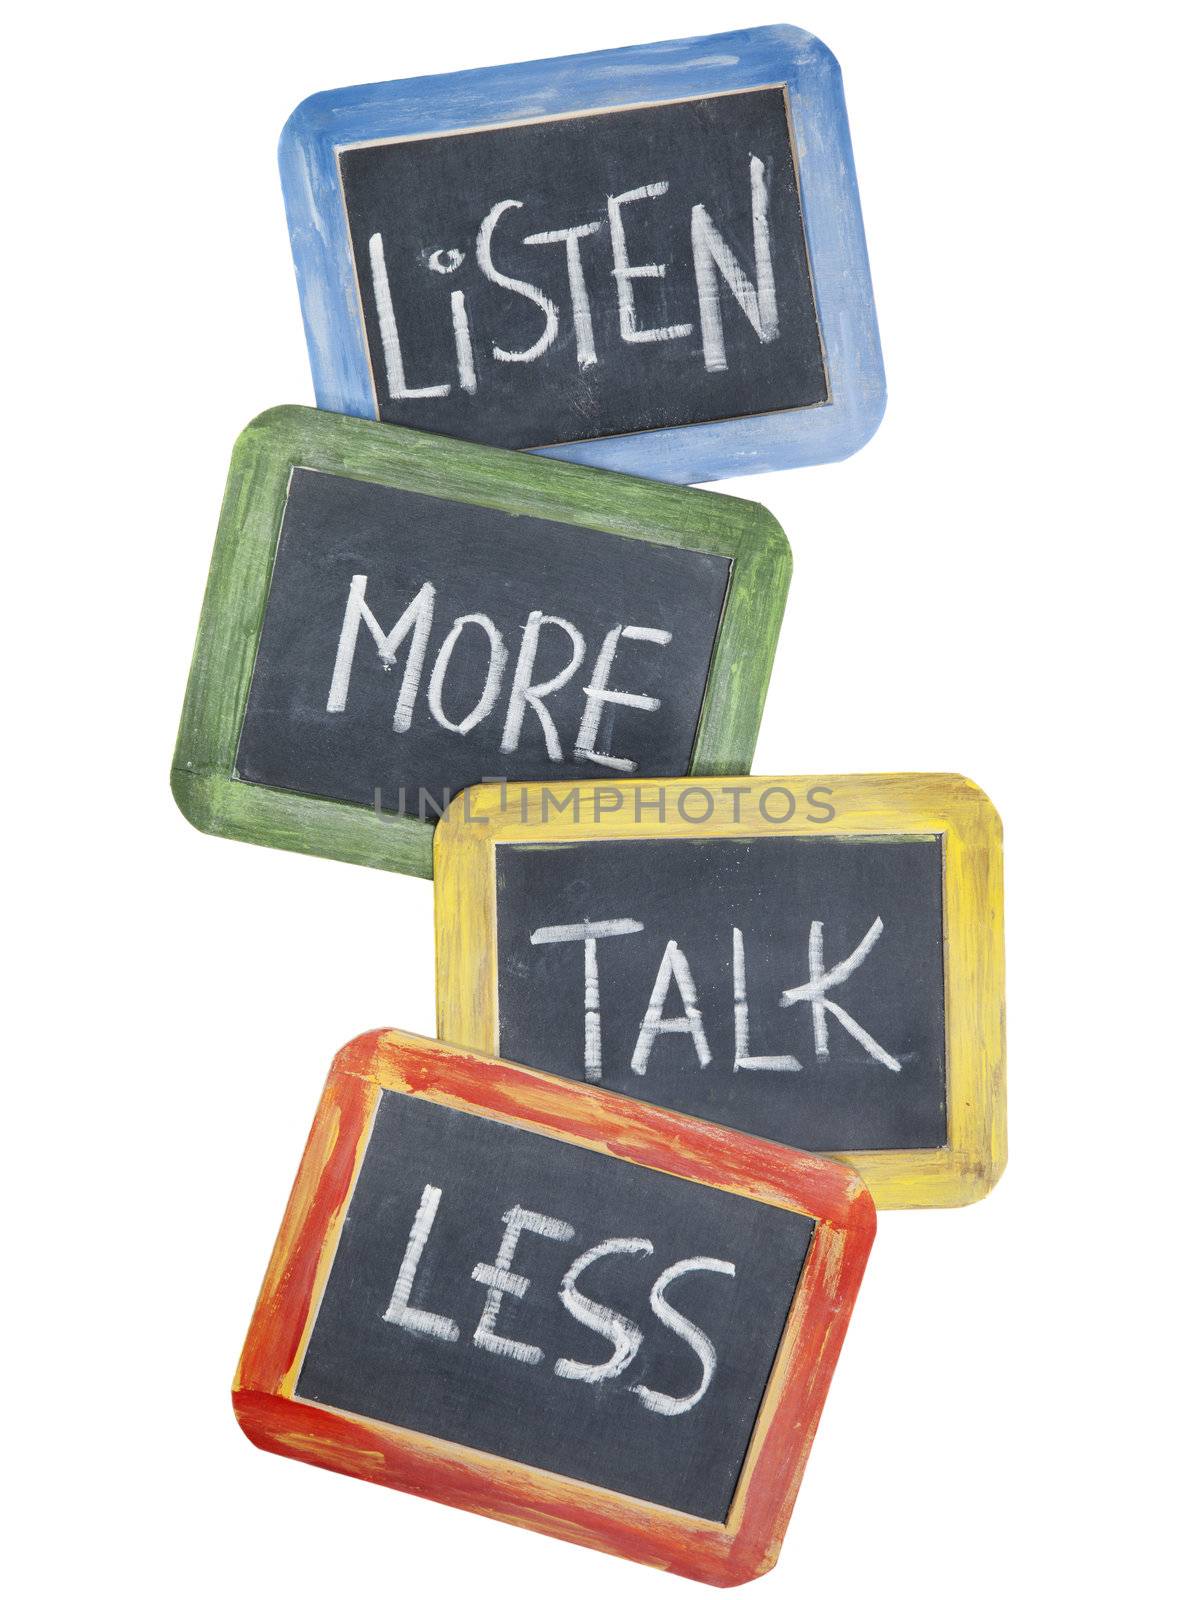 listen more, talk less by PixelsAway